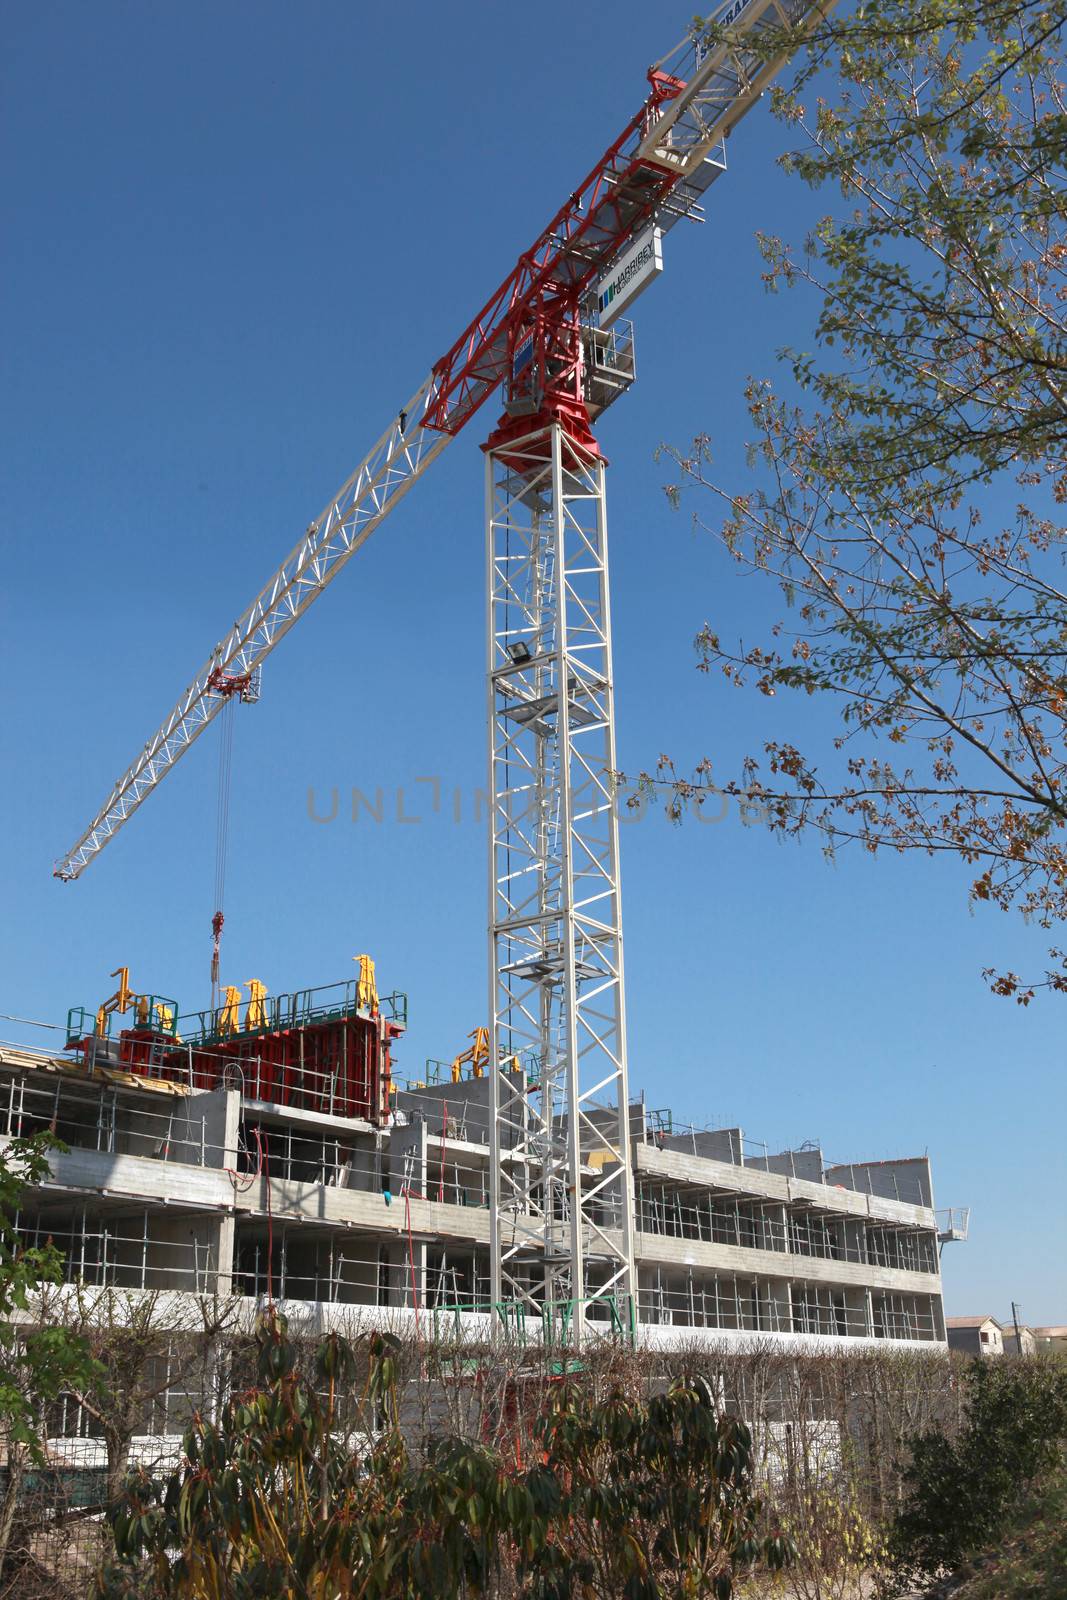 Crane on a site